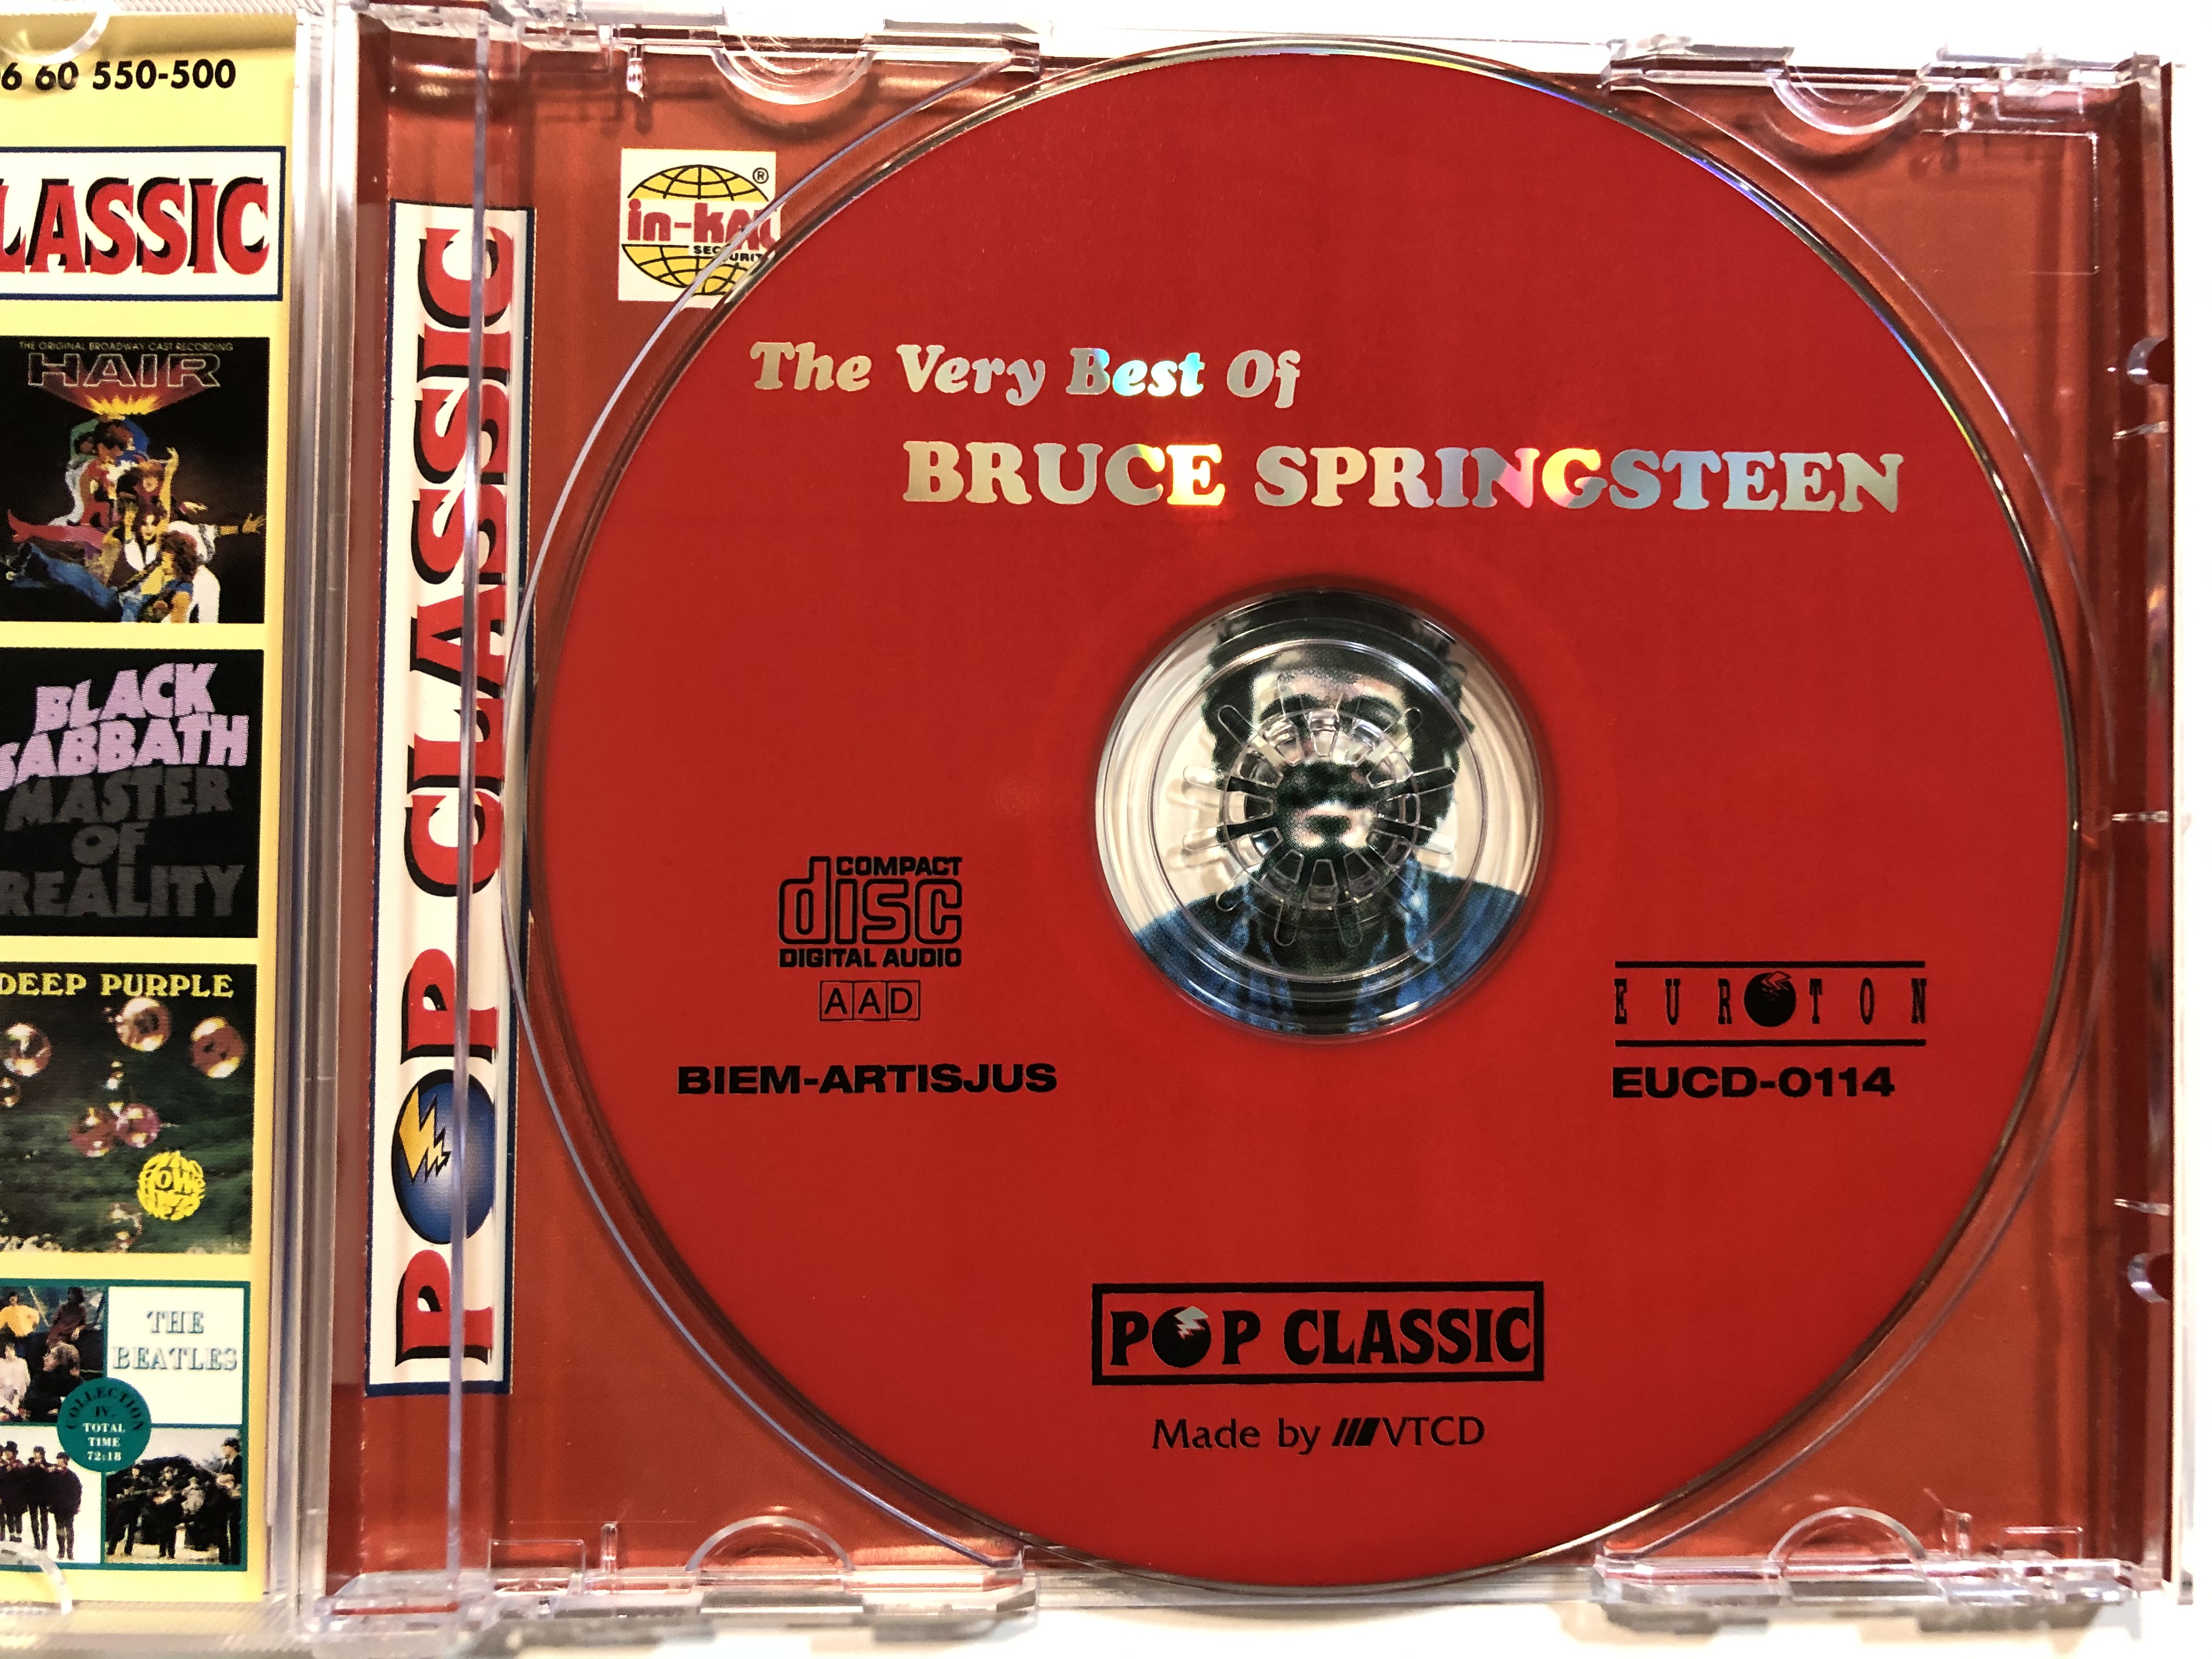 the-very-best-of-bruce-springsteen-pop-classic-euroton-audio-cd-eucd-0114-3-.jpg